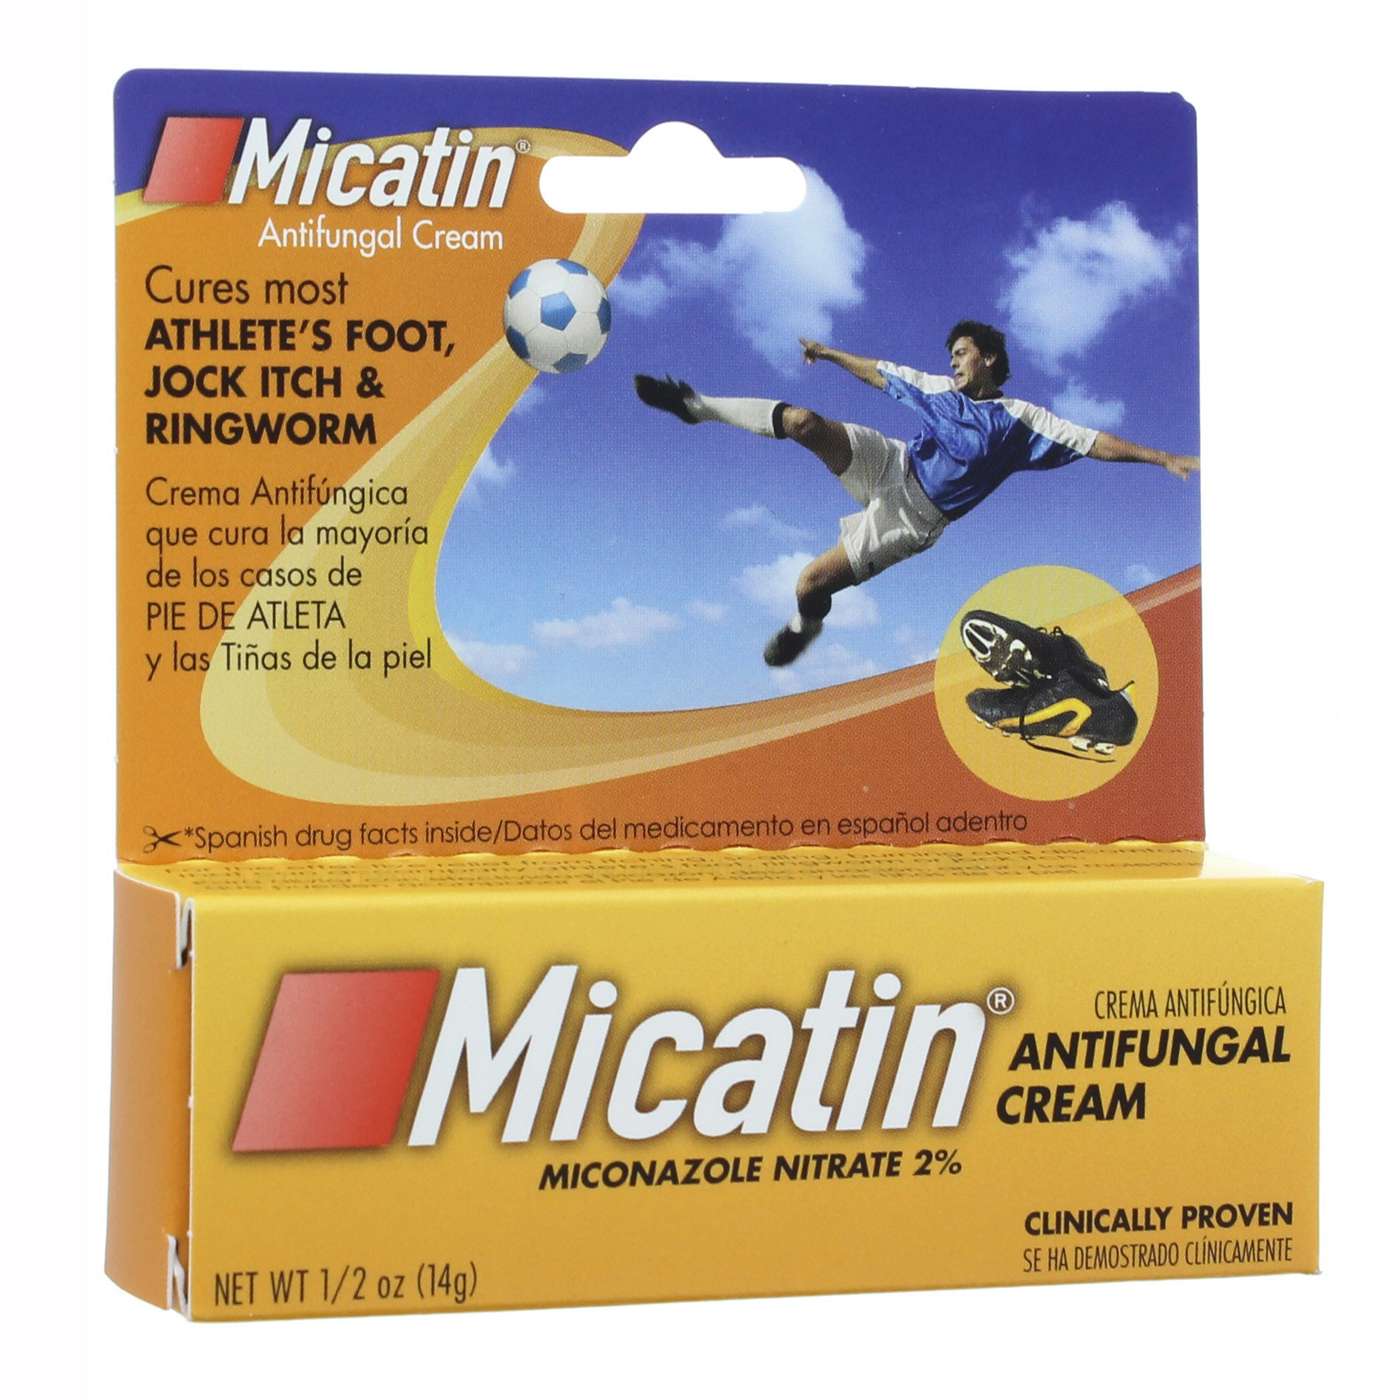 Micatin Antifungal Cream; image 1 of 2